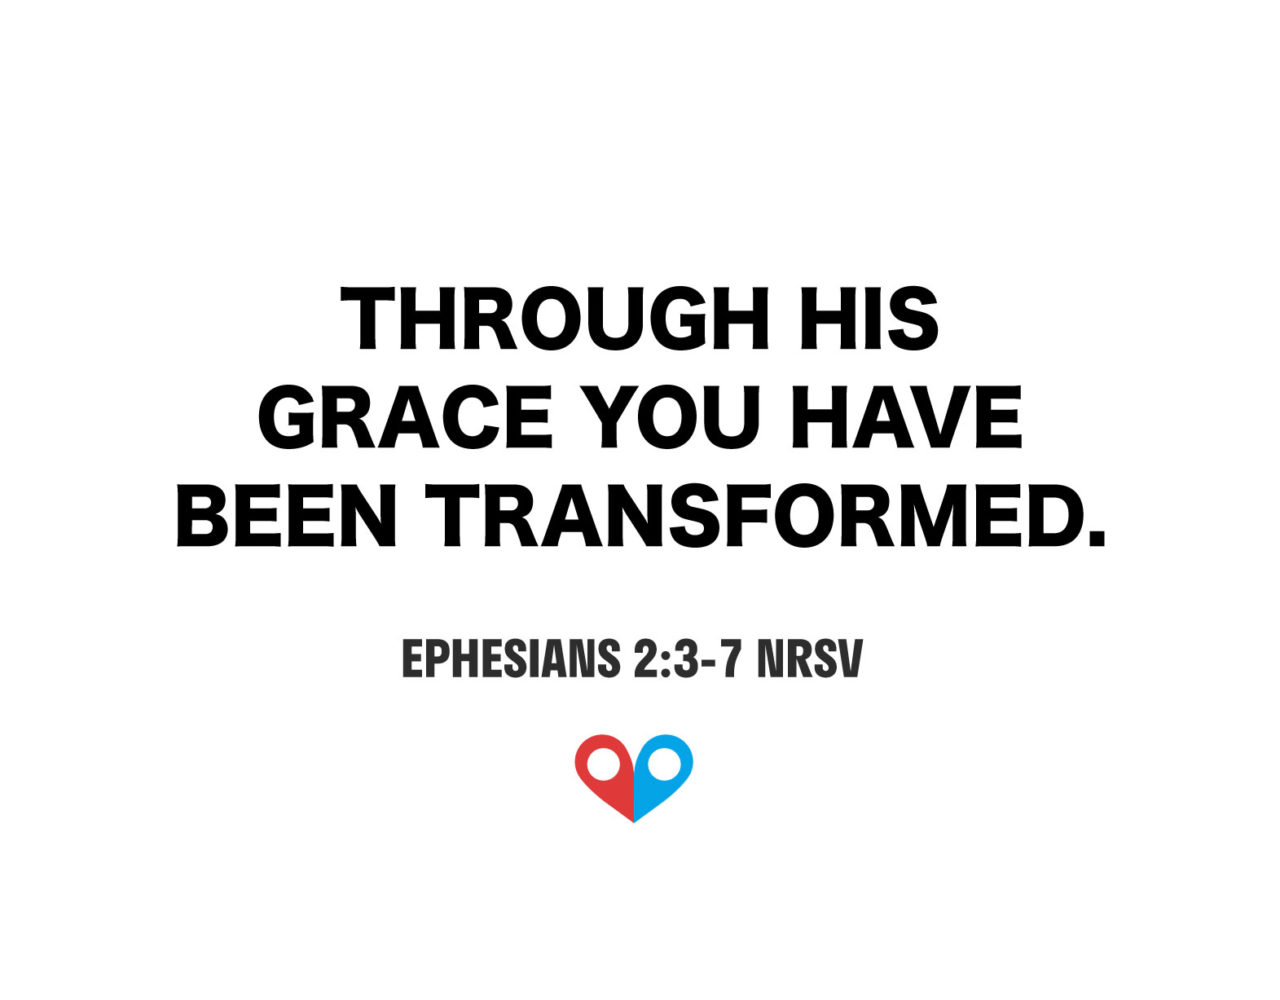 TODAY’S PASSAGE: ‭‭‭‭‭‭‭‭‭‭‭‭‭‭‭‭‭‭‭‭‭‭‭‭‭‭‭‭‭‭‭‭‭‭‭‭‭‭‭‭‭‭‭‭‭‭‭‭‭‭‭‭‭‭‭‭‭‭‭‭‭‭‭‭‭‭‭‭‭‭‭‭‭‭‭‭‭‭‭‭‭‭‭‭‭‭ ‭‭‭‭‭‭‭‭‭‭‭‭‭‭Ephesians‬ ‭2:3-7‬ ‭NRSV‬‬